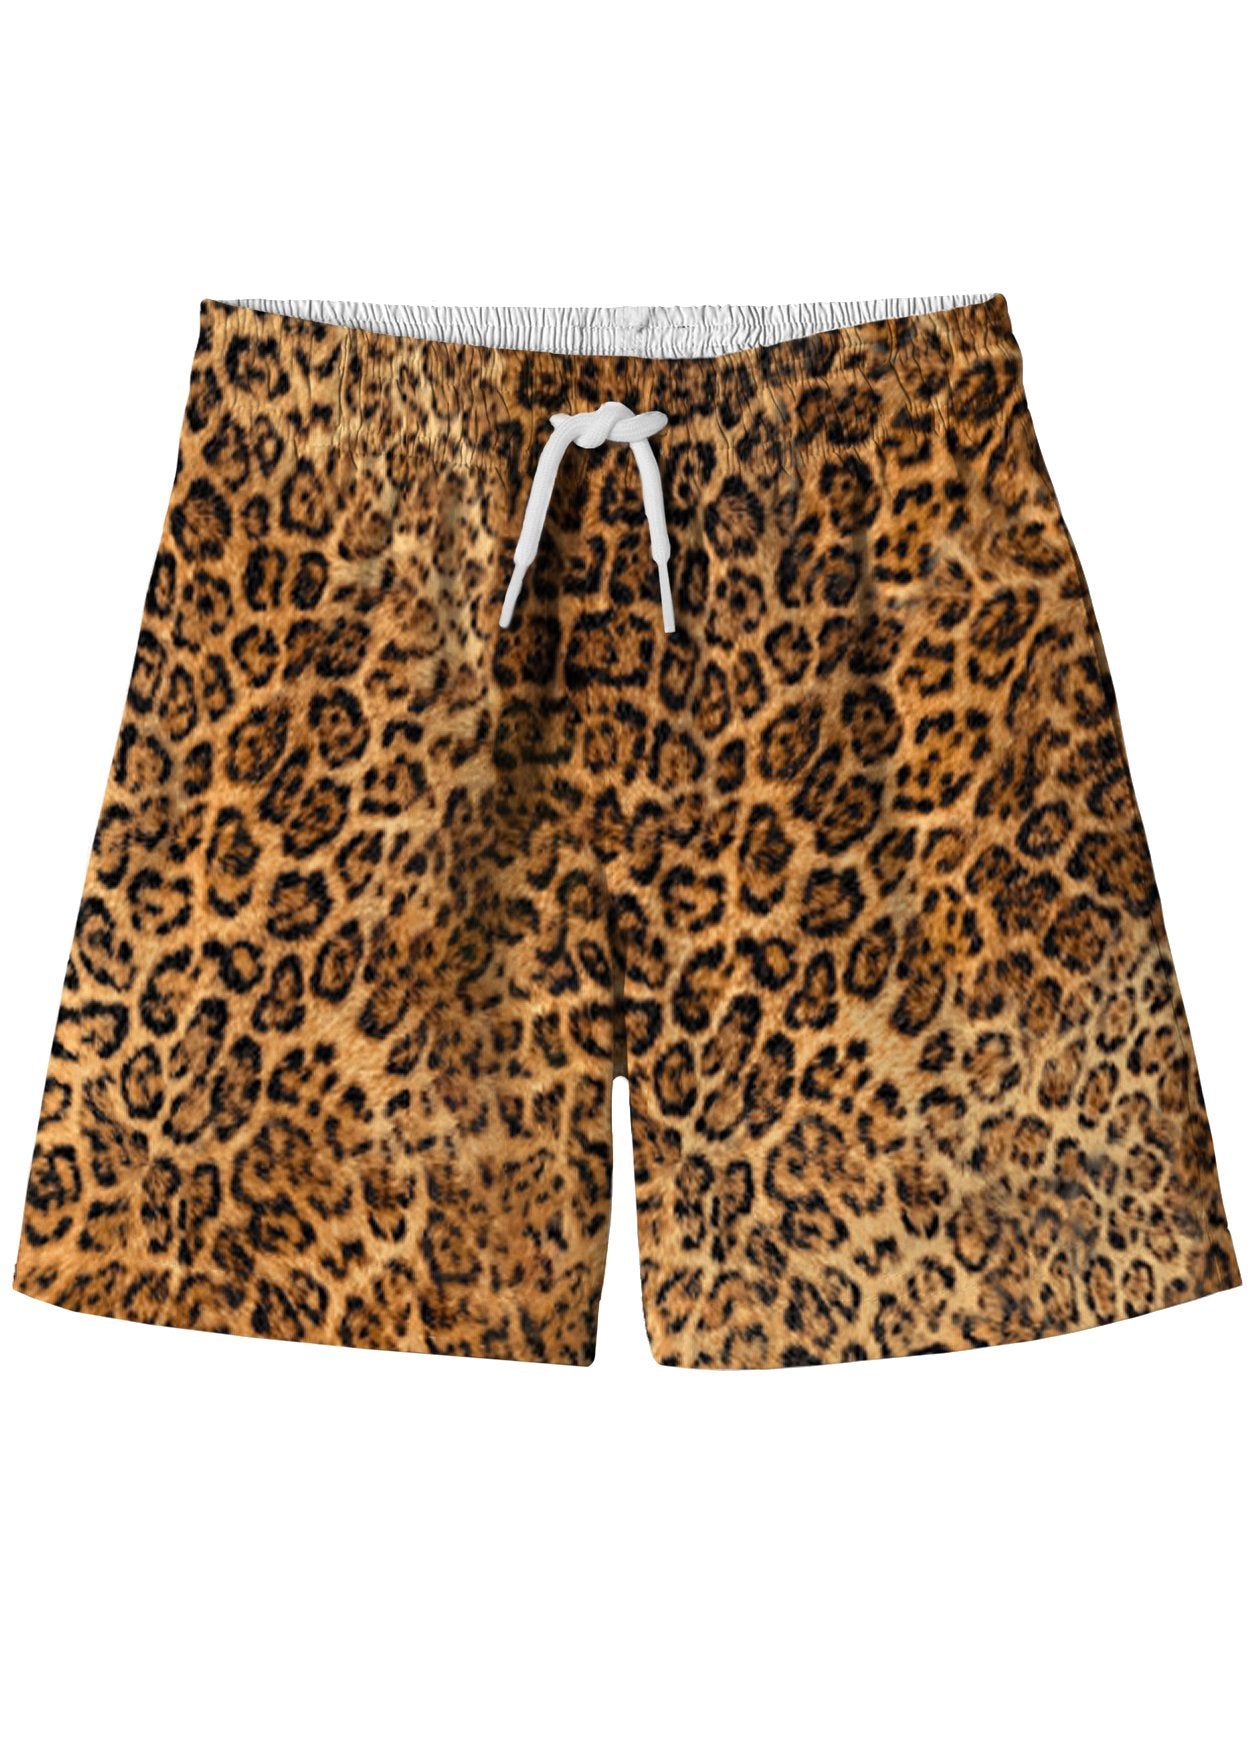 Shorts de baño de guepardo